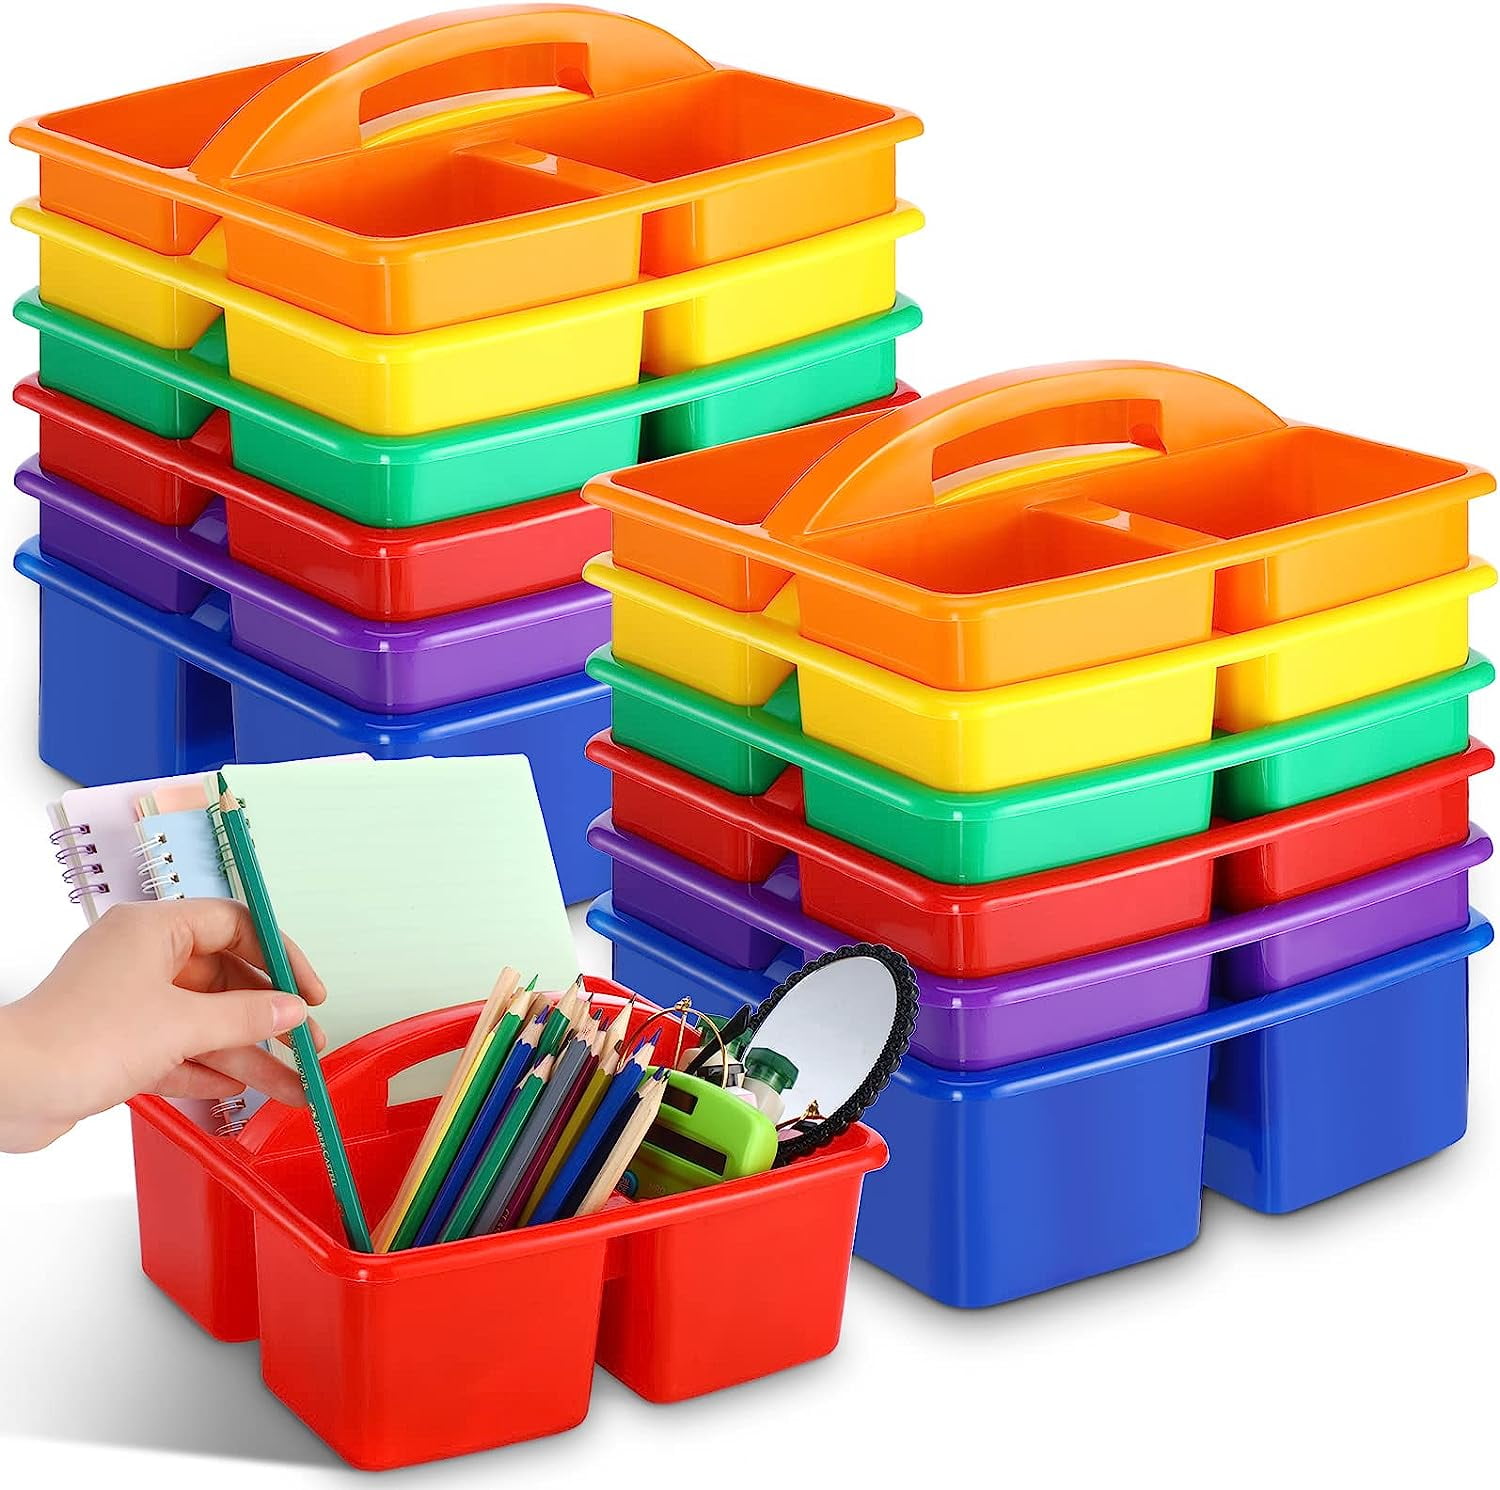 Classroom Stacking Bins, 12-Pack - Rainbow